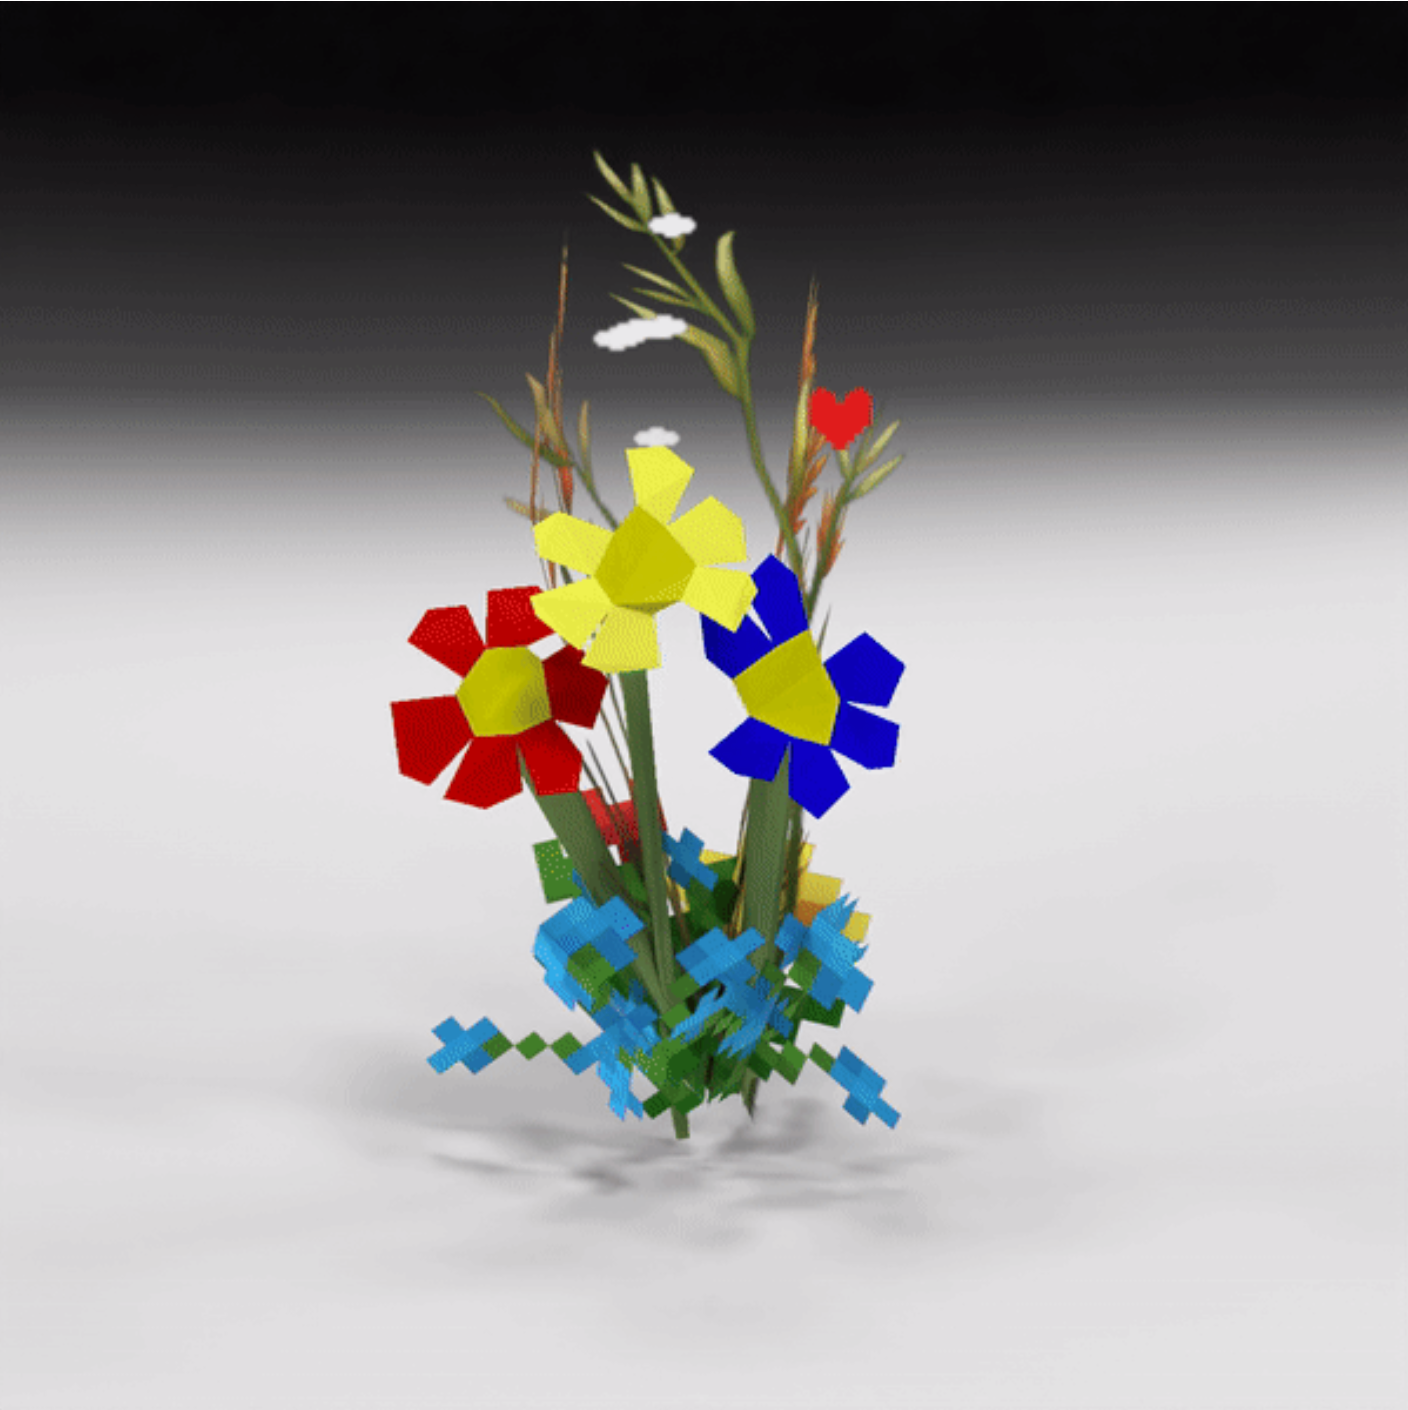 Jill Magid x Artwrld presenta “Out-Game Flowers”